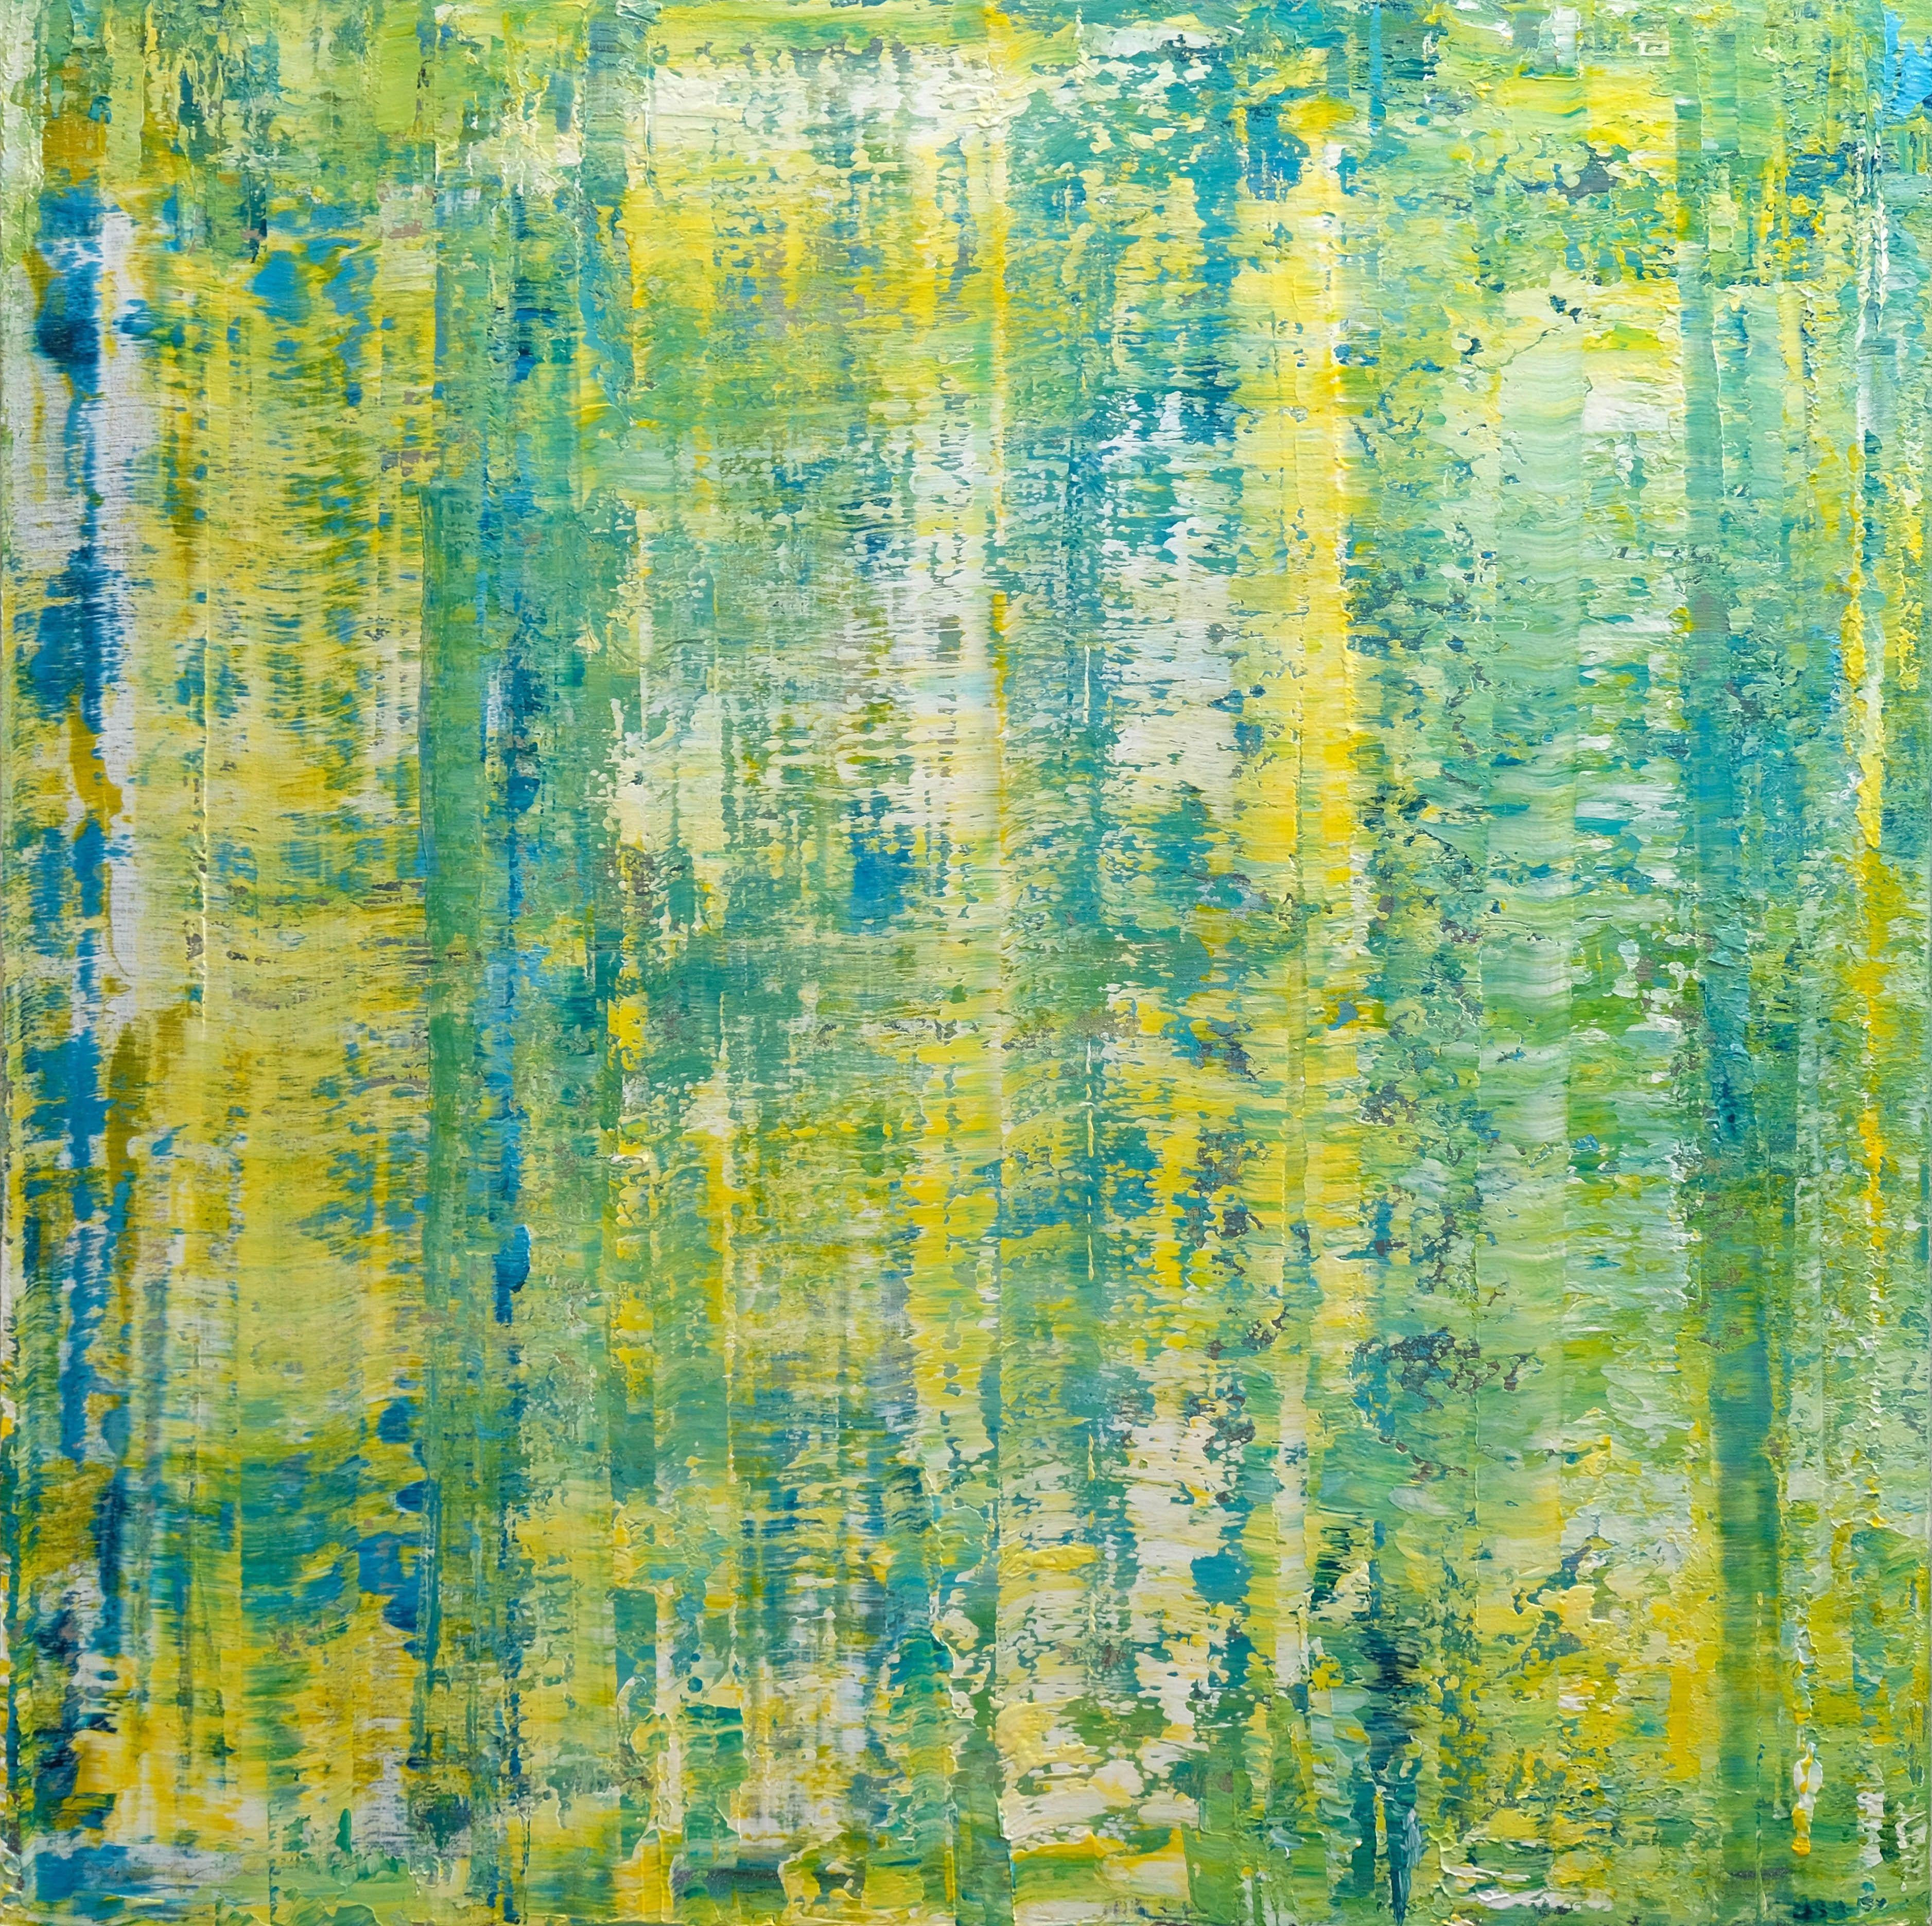 Abstract Painting Behshad Arjomandi - Composition abstraite verte II, peinture, acrylique sur toile